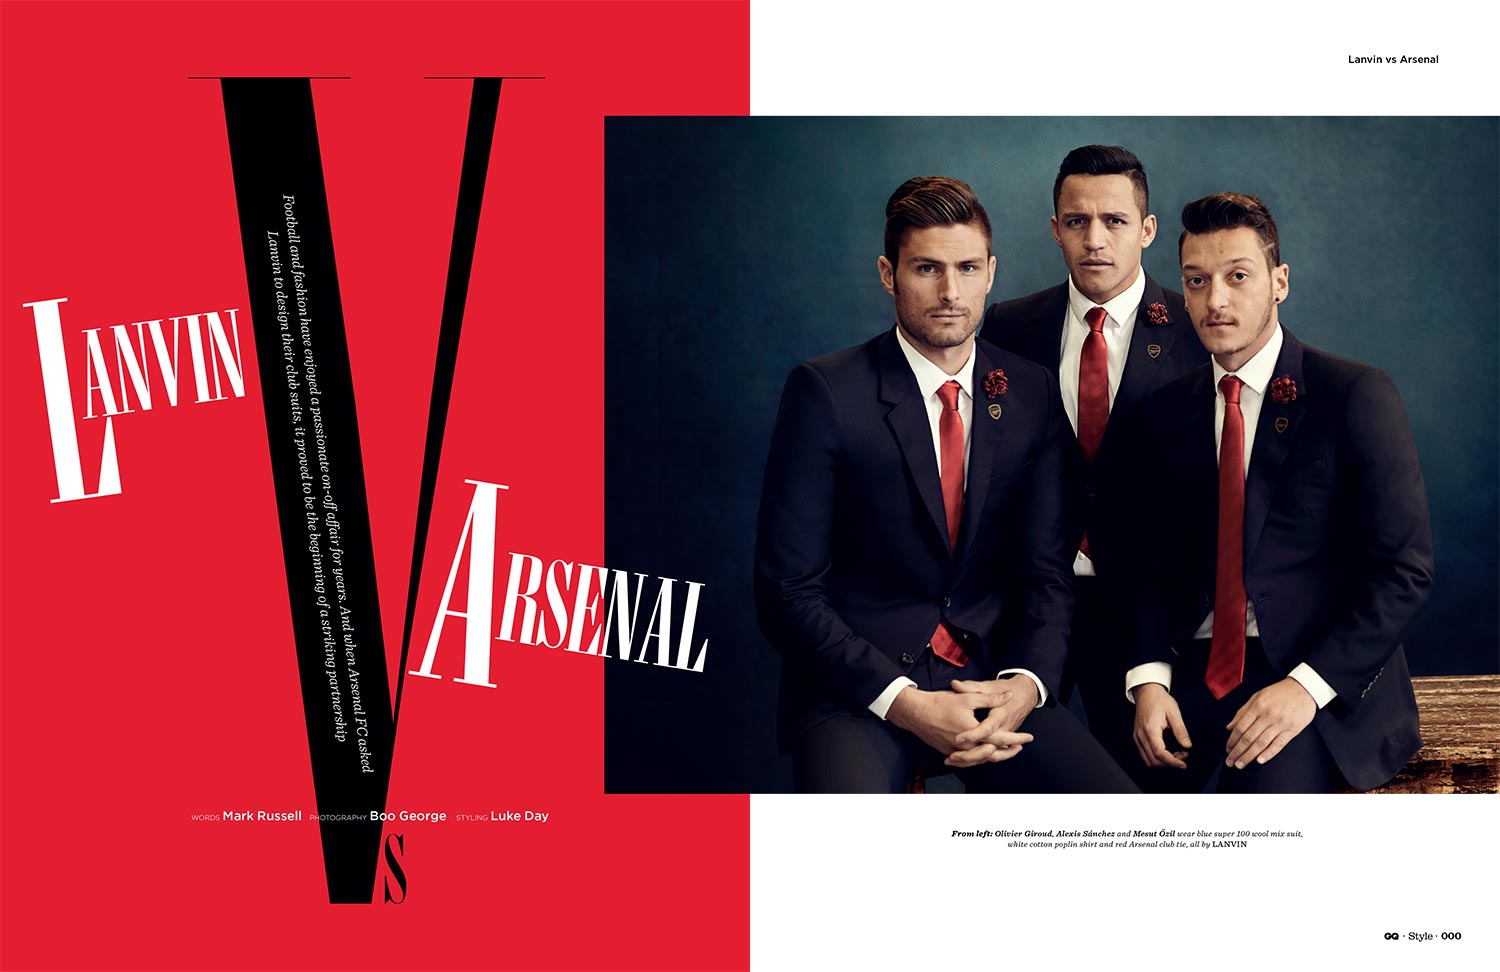 GQ Style - Lanvin V Arsenal